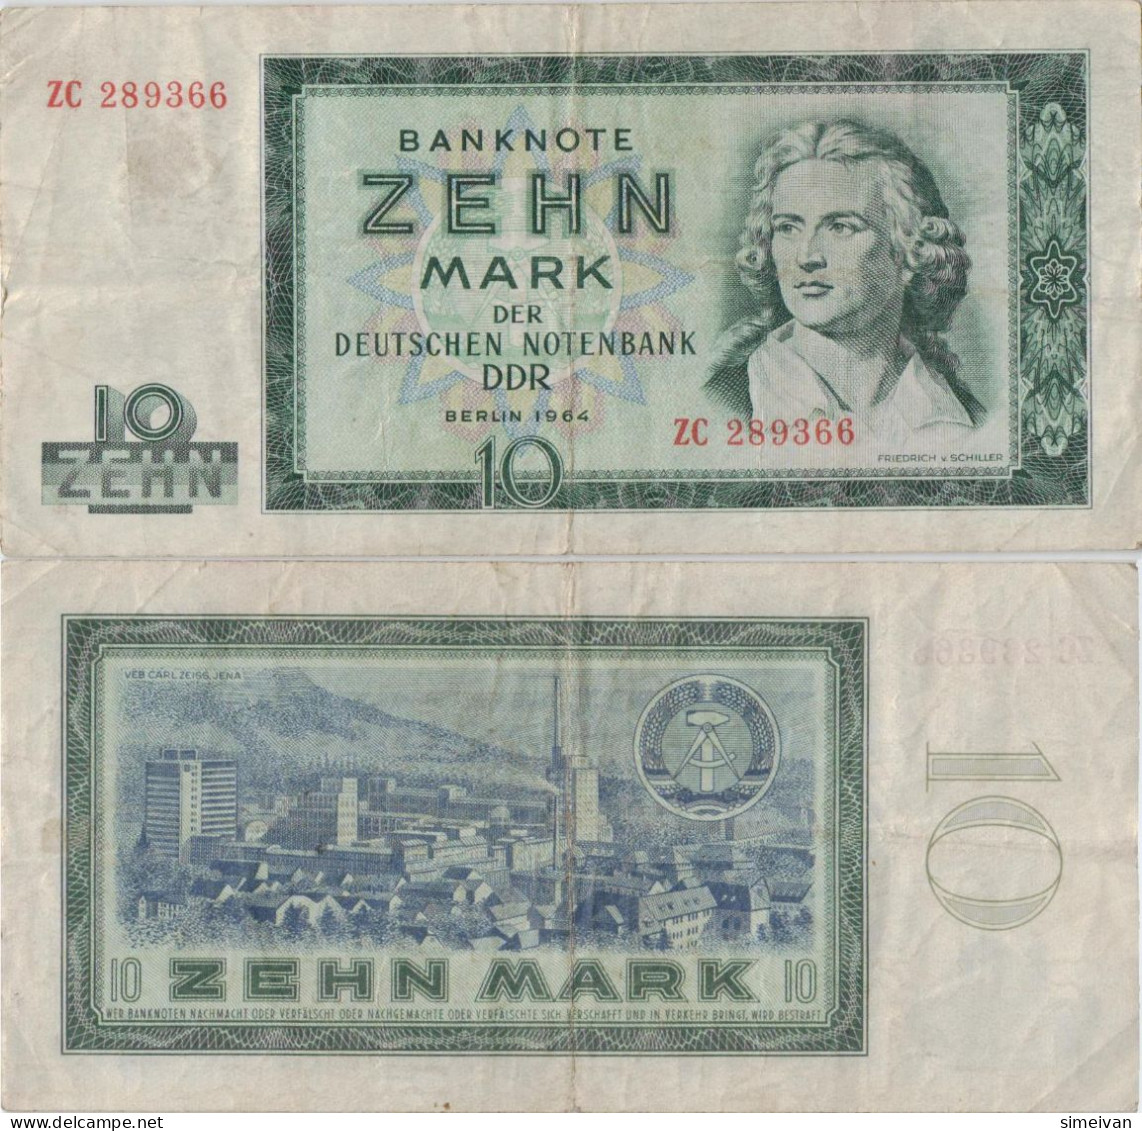 Germany Democratic Republic 10 Mark 1964 P-23a DDR East Germany Replacement Banknote Deutschland Allemagne #5079 - 10 Deutsche Mark